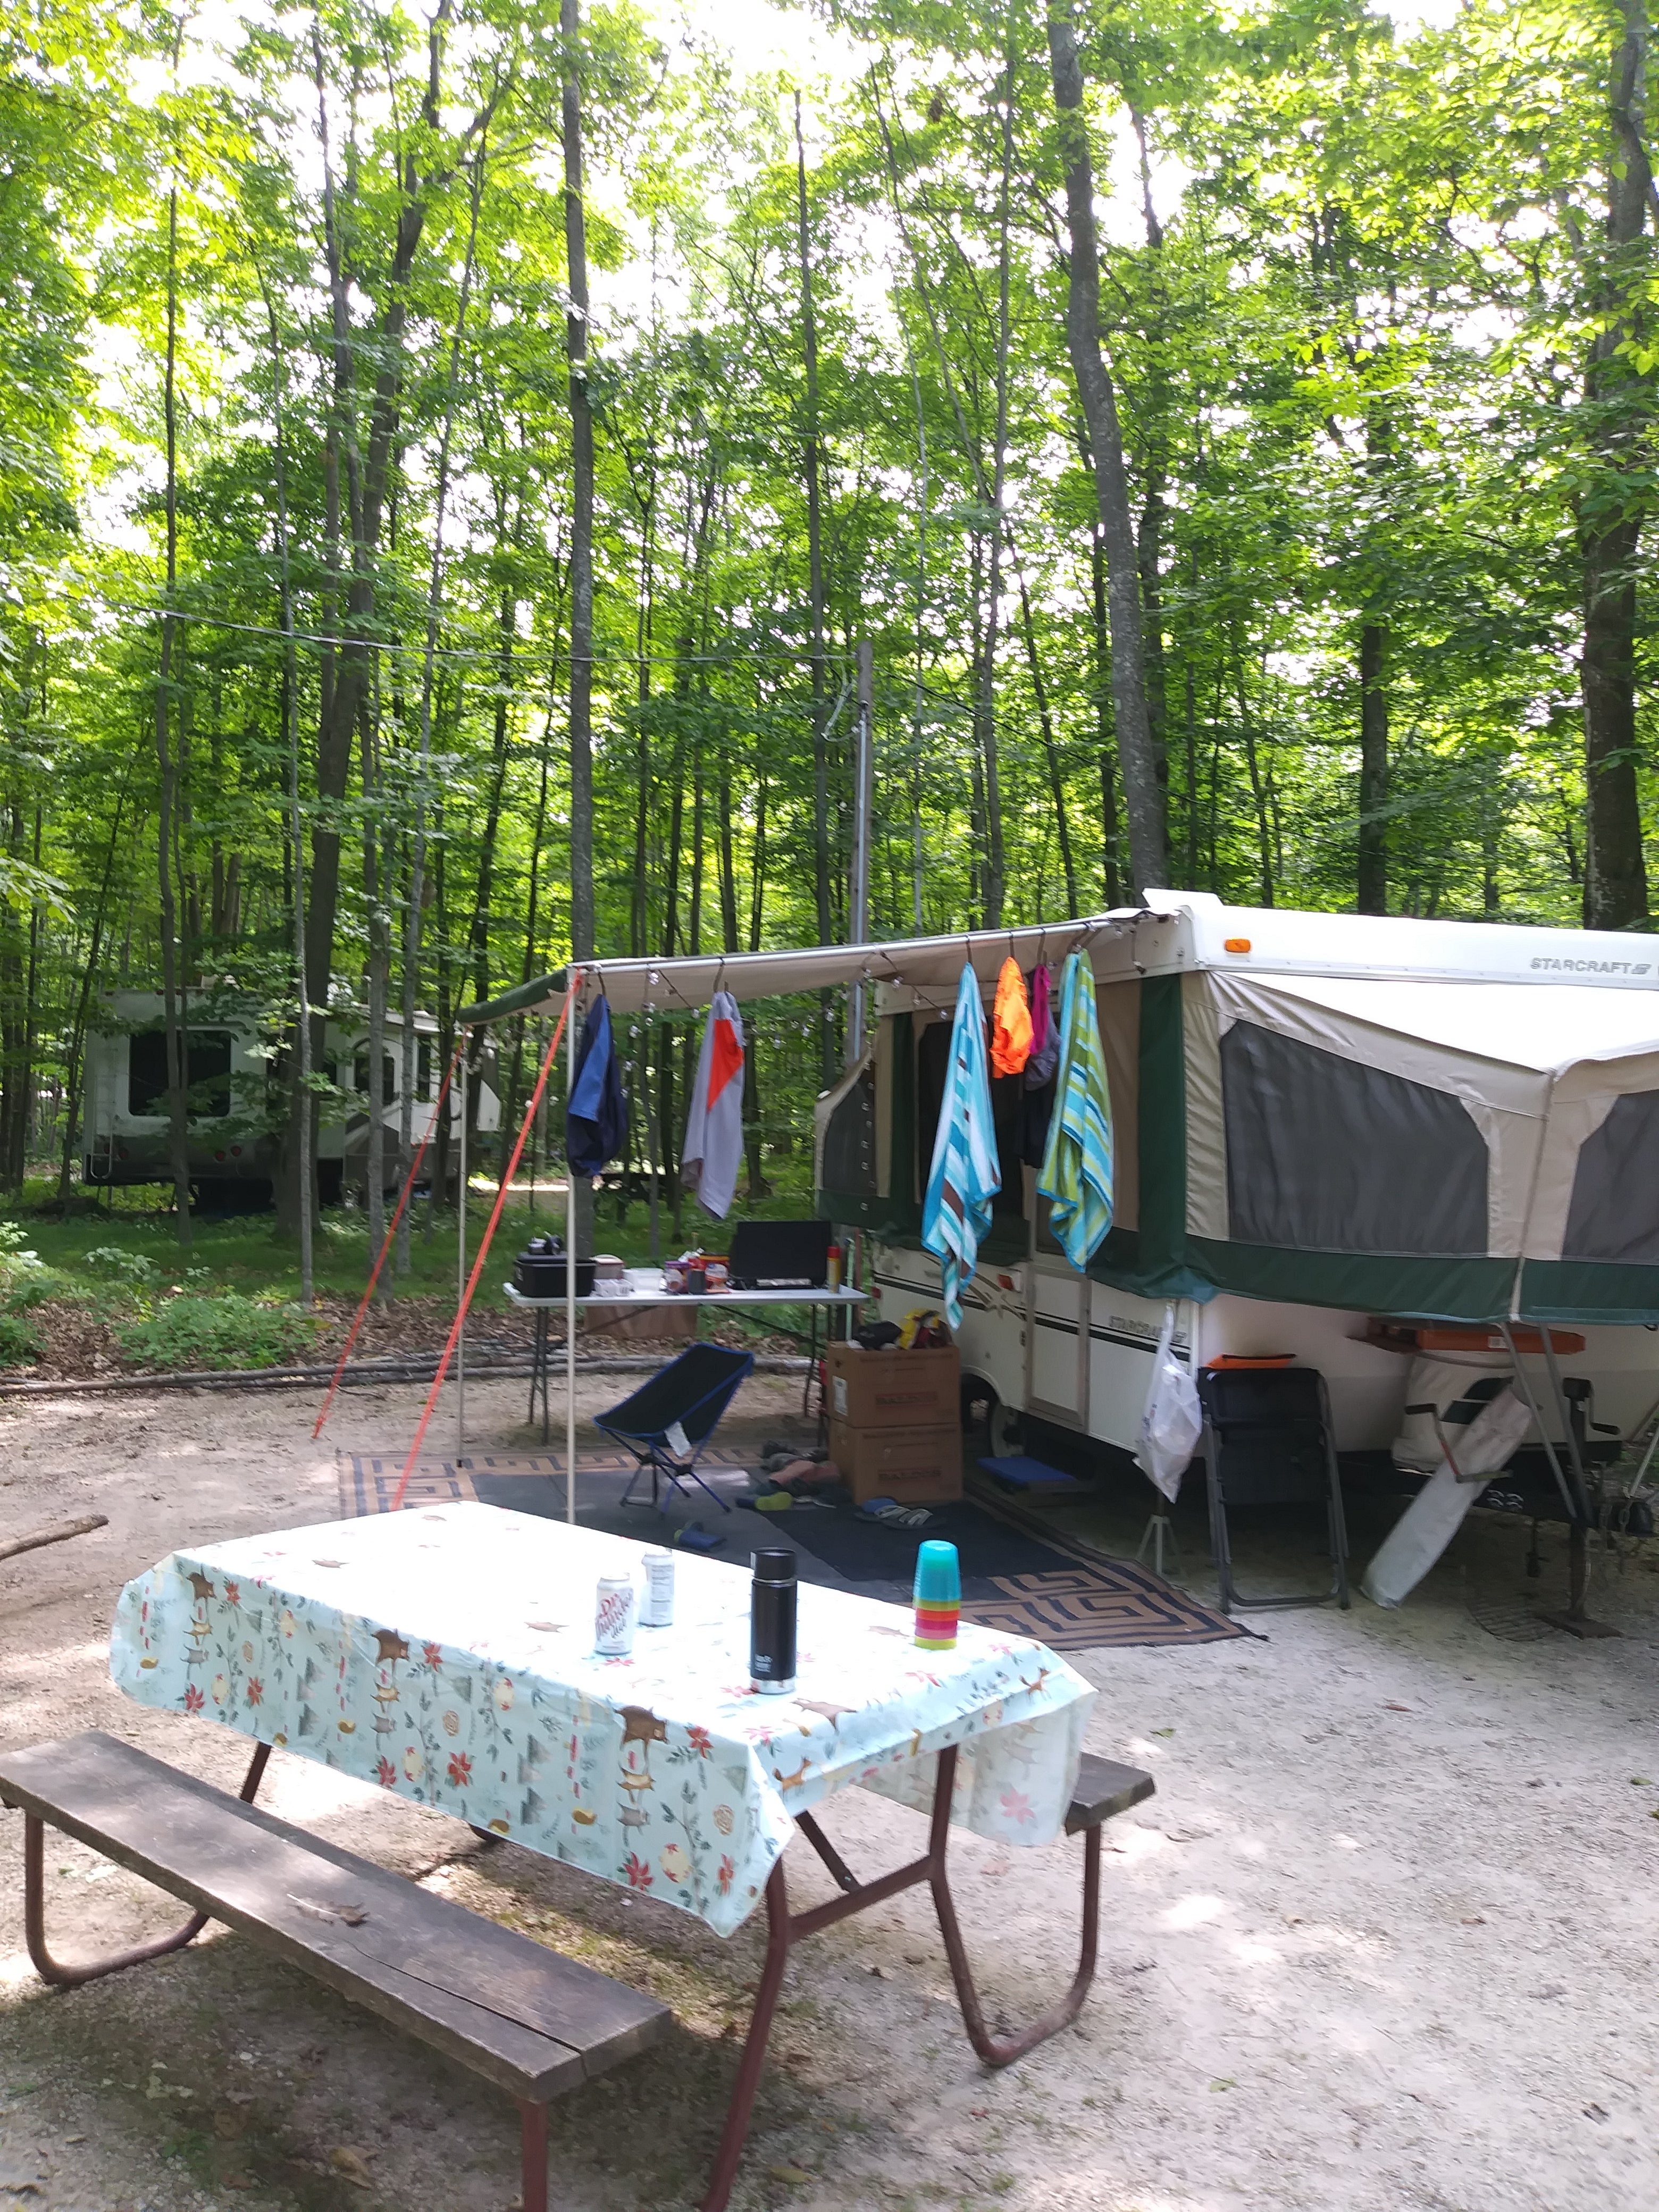 Popup camper site.